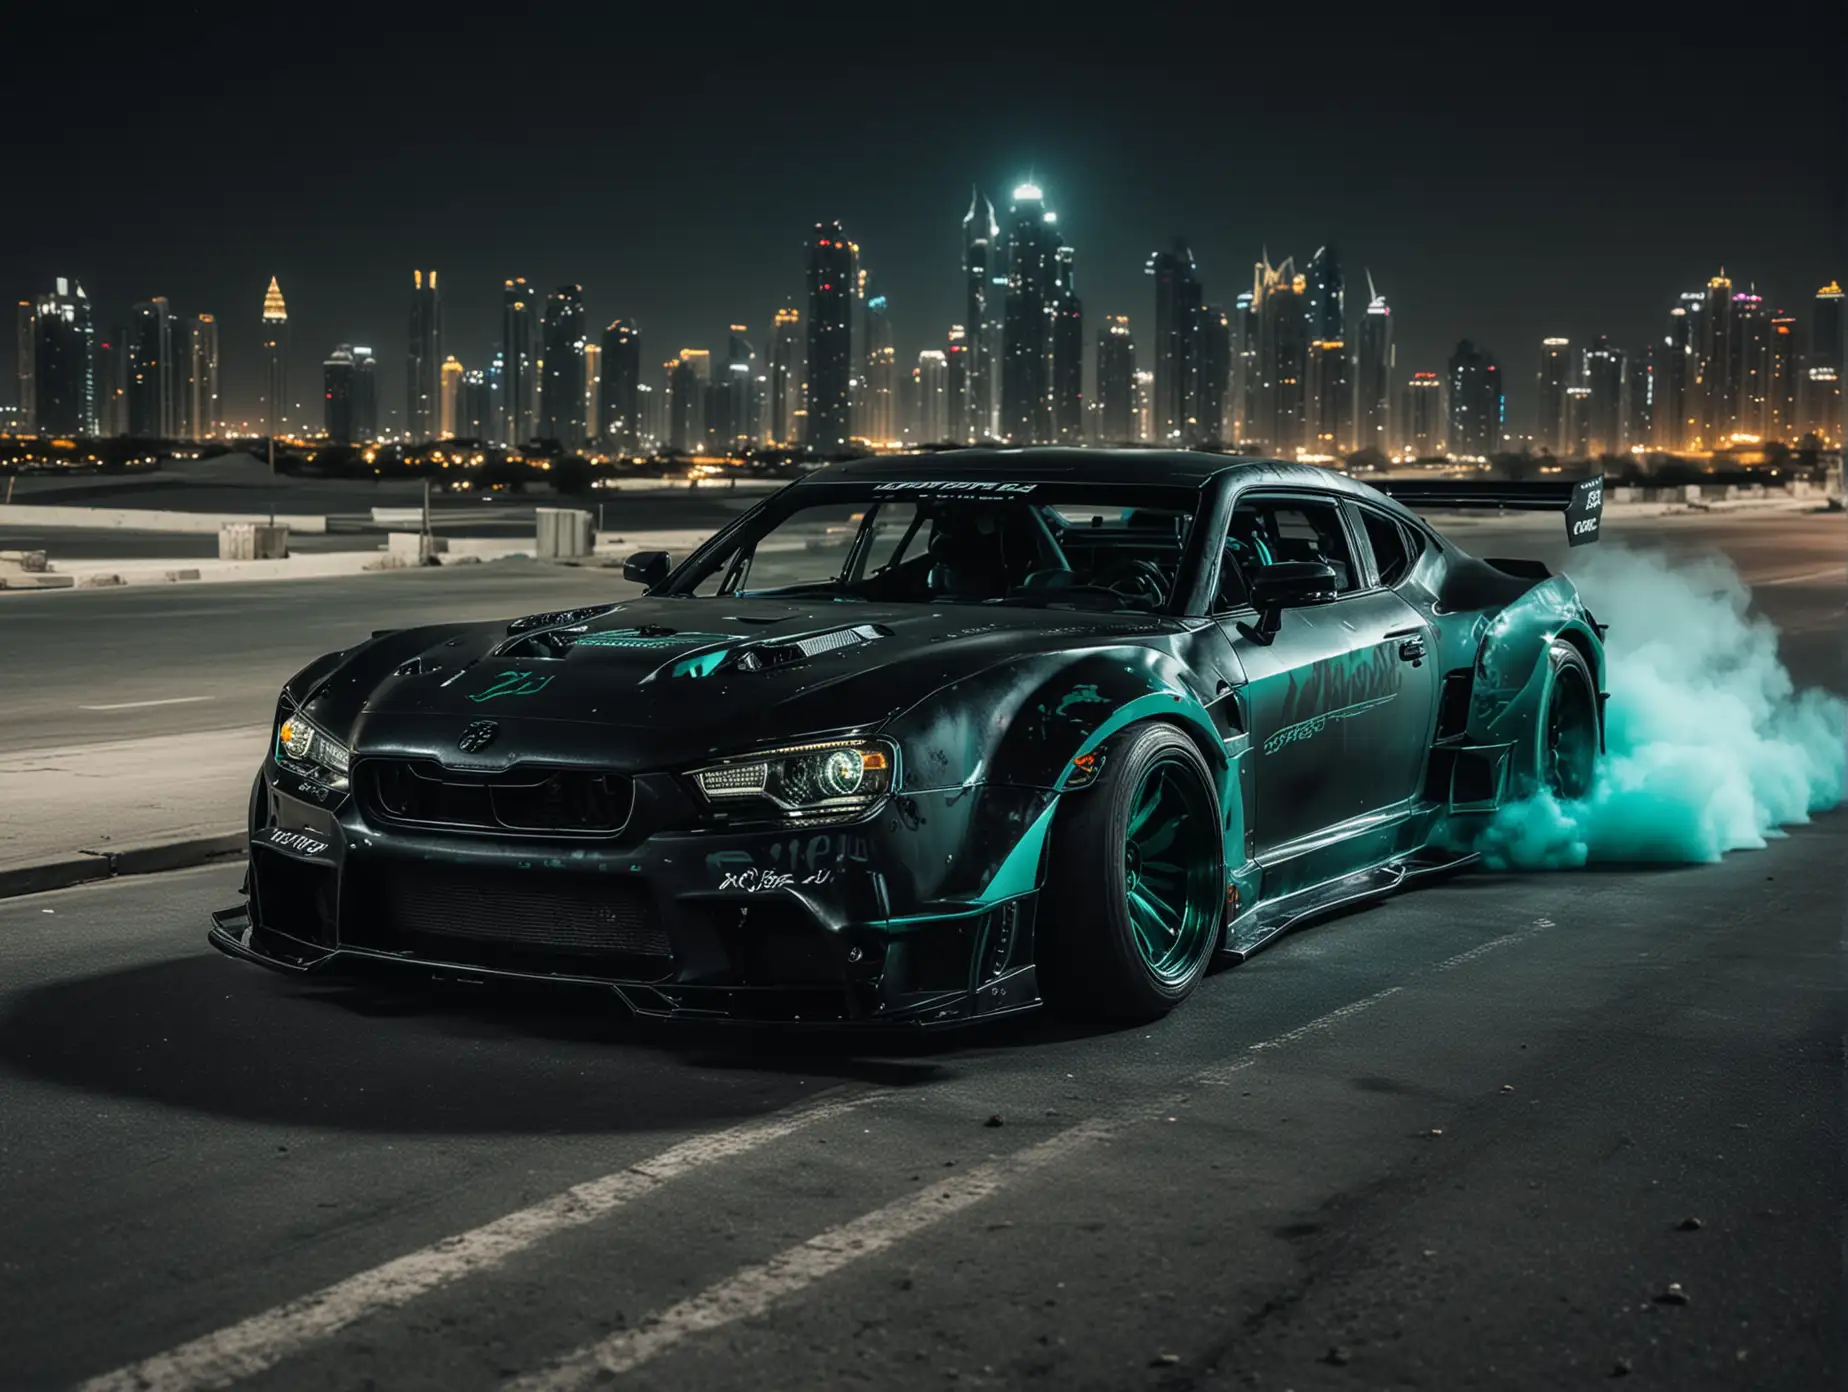 Nighttime-Hulk-Drifting-Cars-in-Dubai-Dark-Carbon-Black-and-Turquoise-Tinged-Evil-Tuning